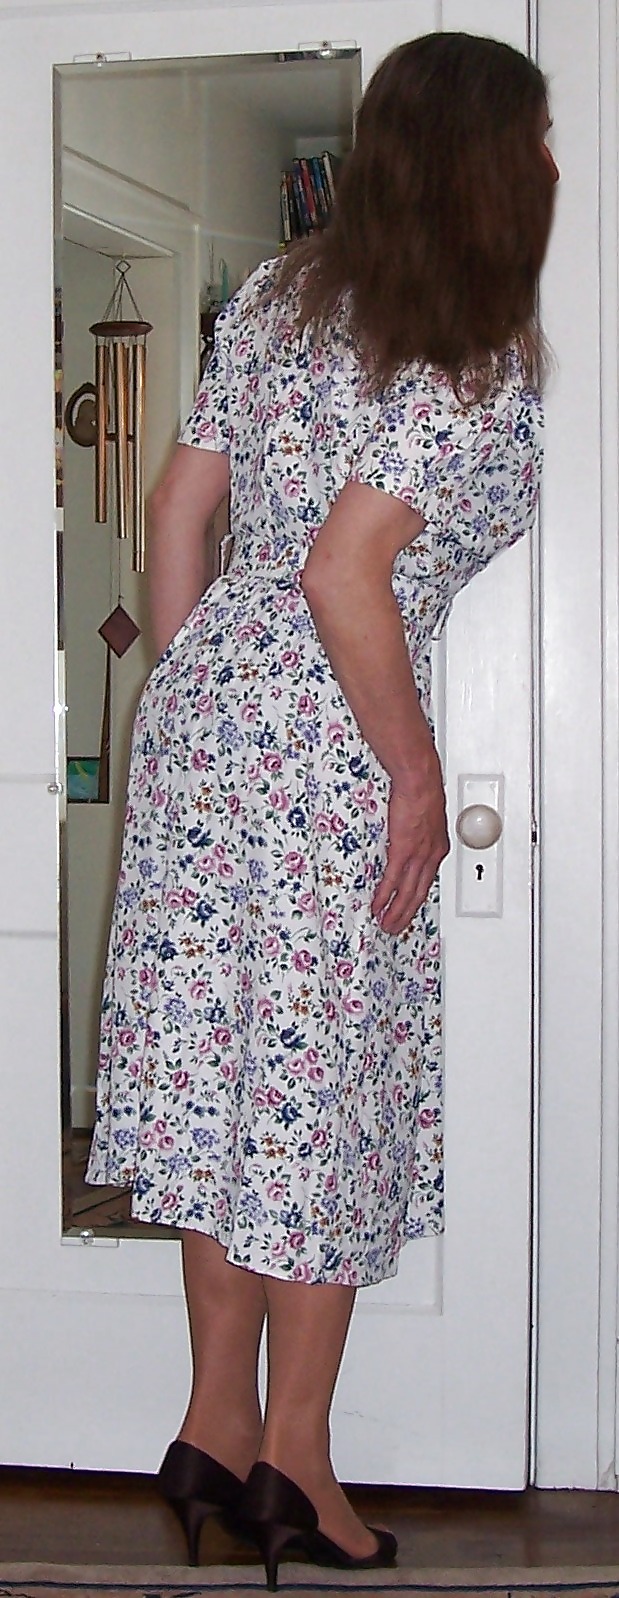 My Spring Dress #7838920